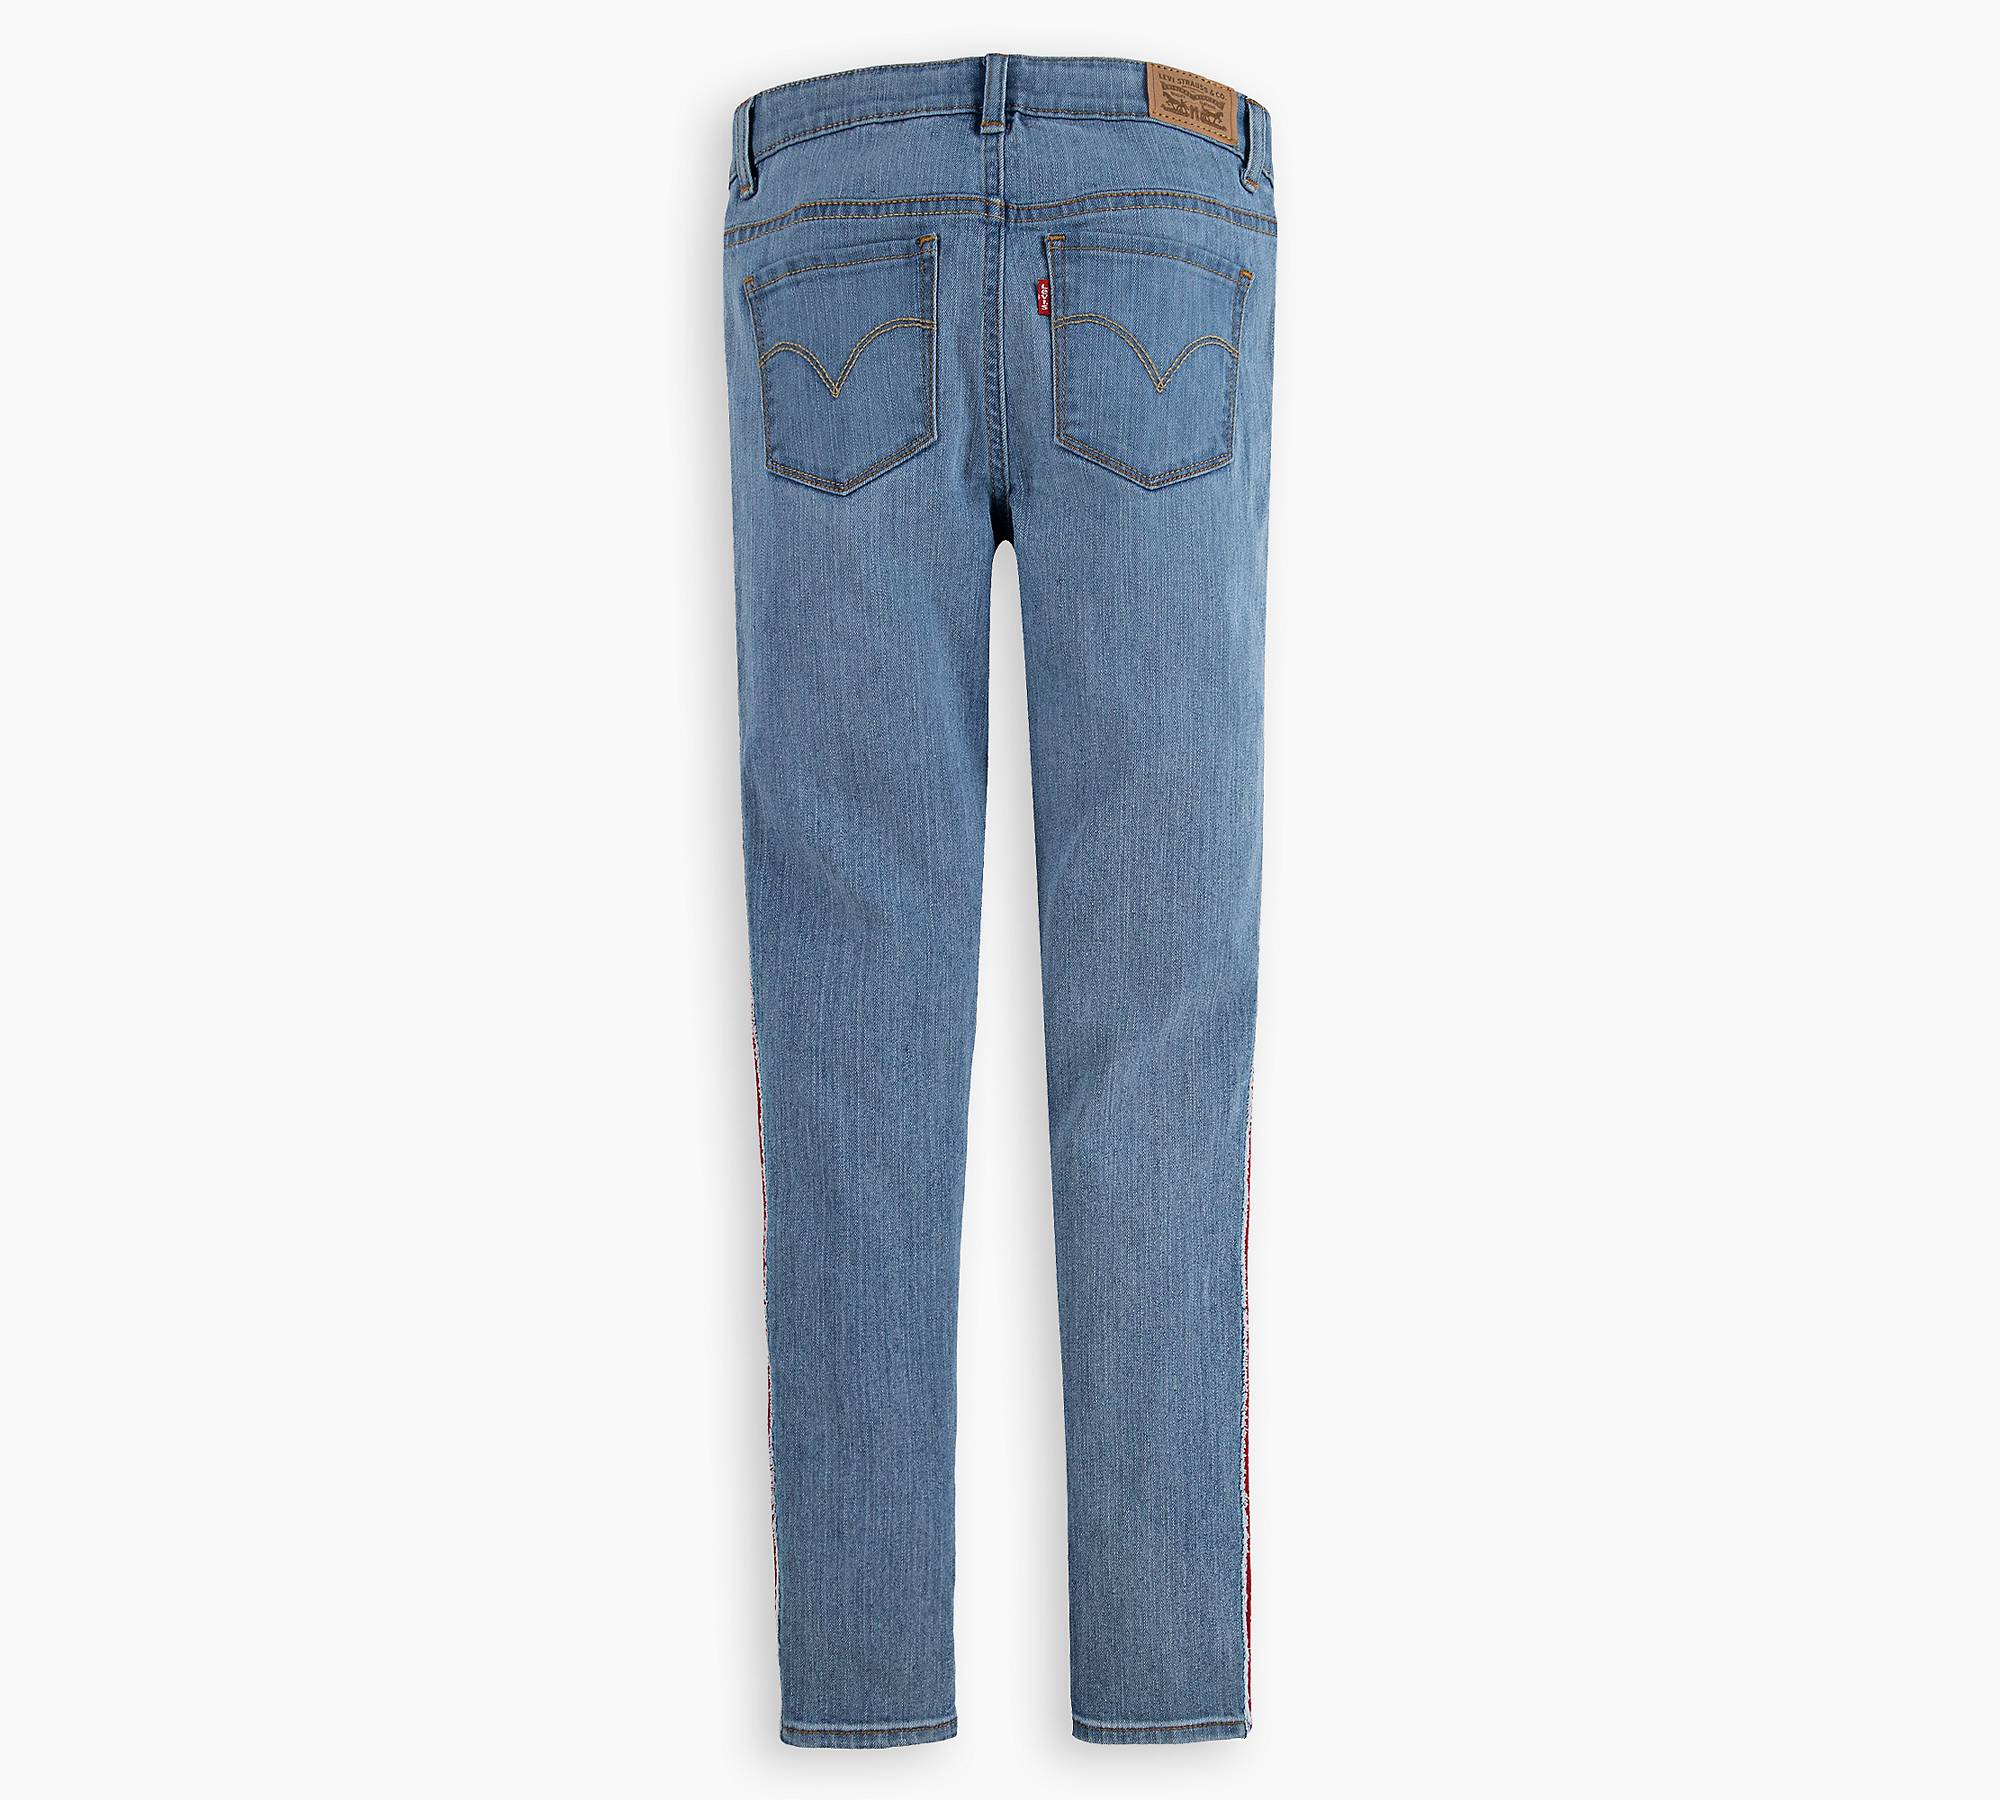 720 High Rise Super Skinny Little Girls Jeans 4-6x - Medium Wash | Levi ...